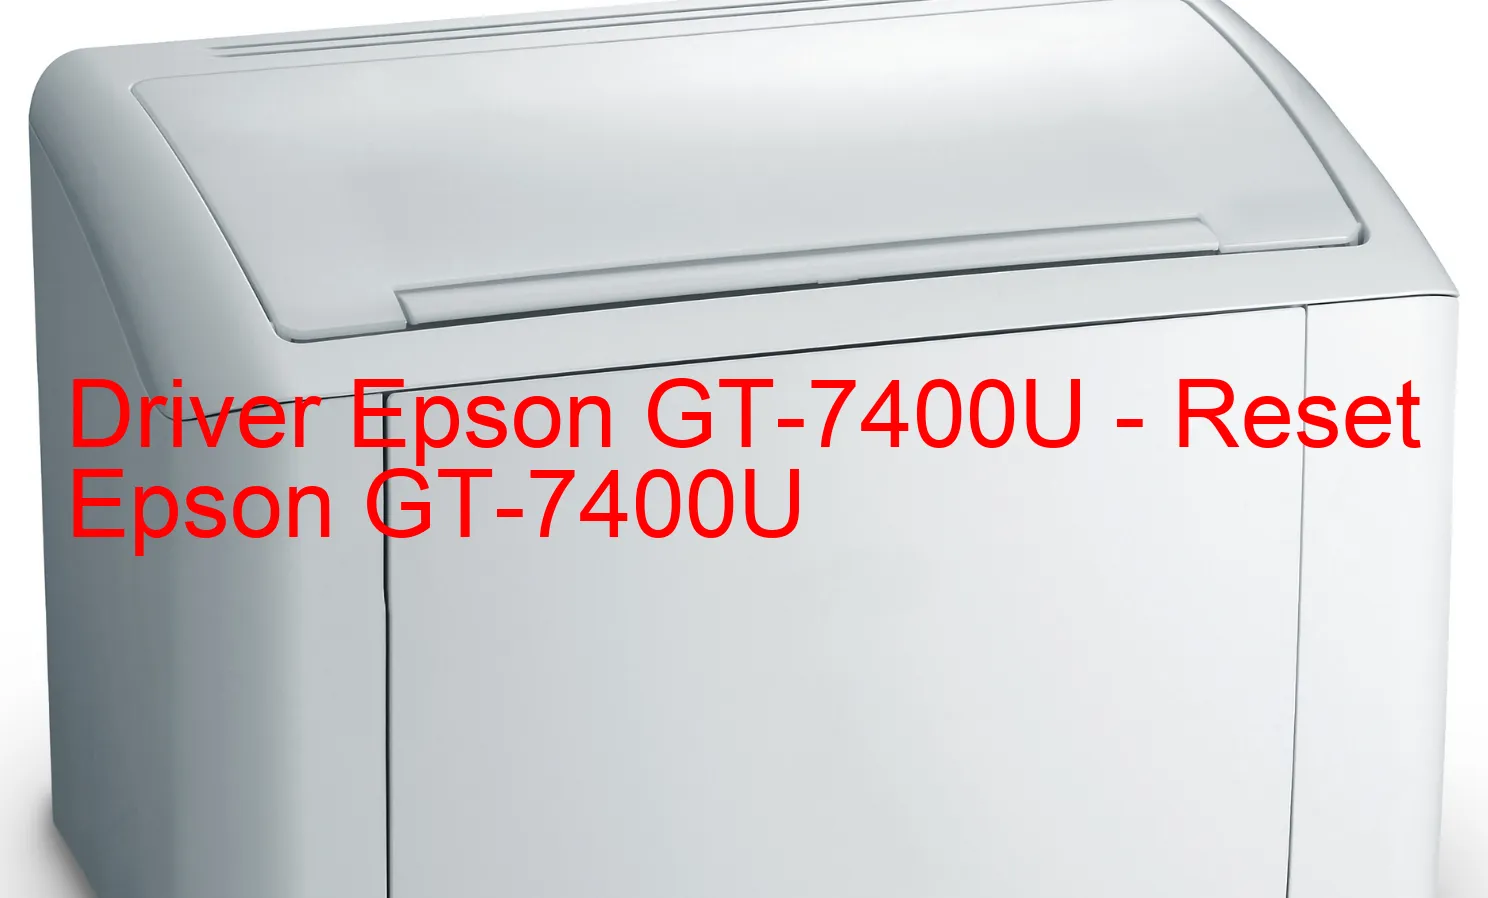 Epson GT-7400Uのドライバー、Epson GT-7400Uのリセットソフトウェア